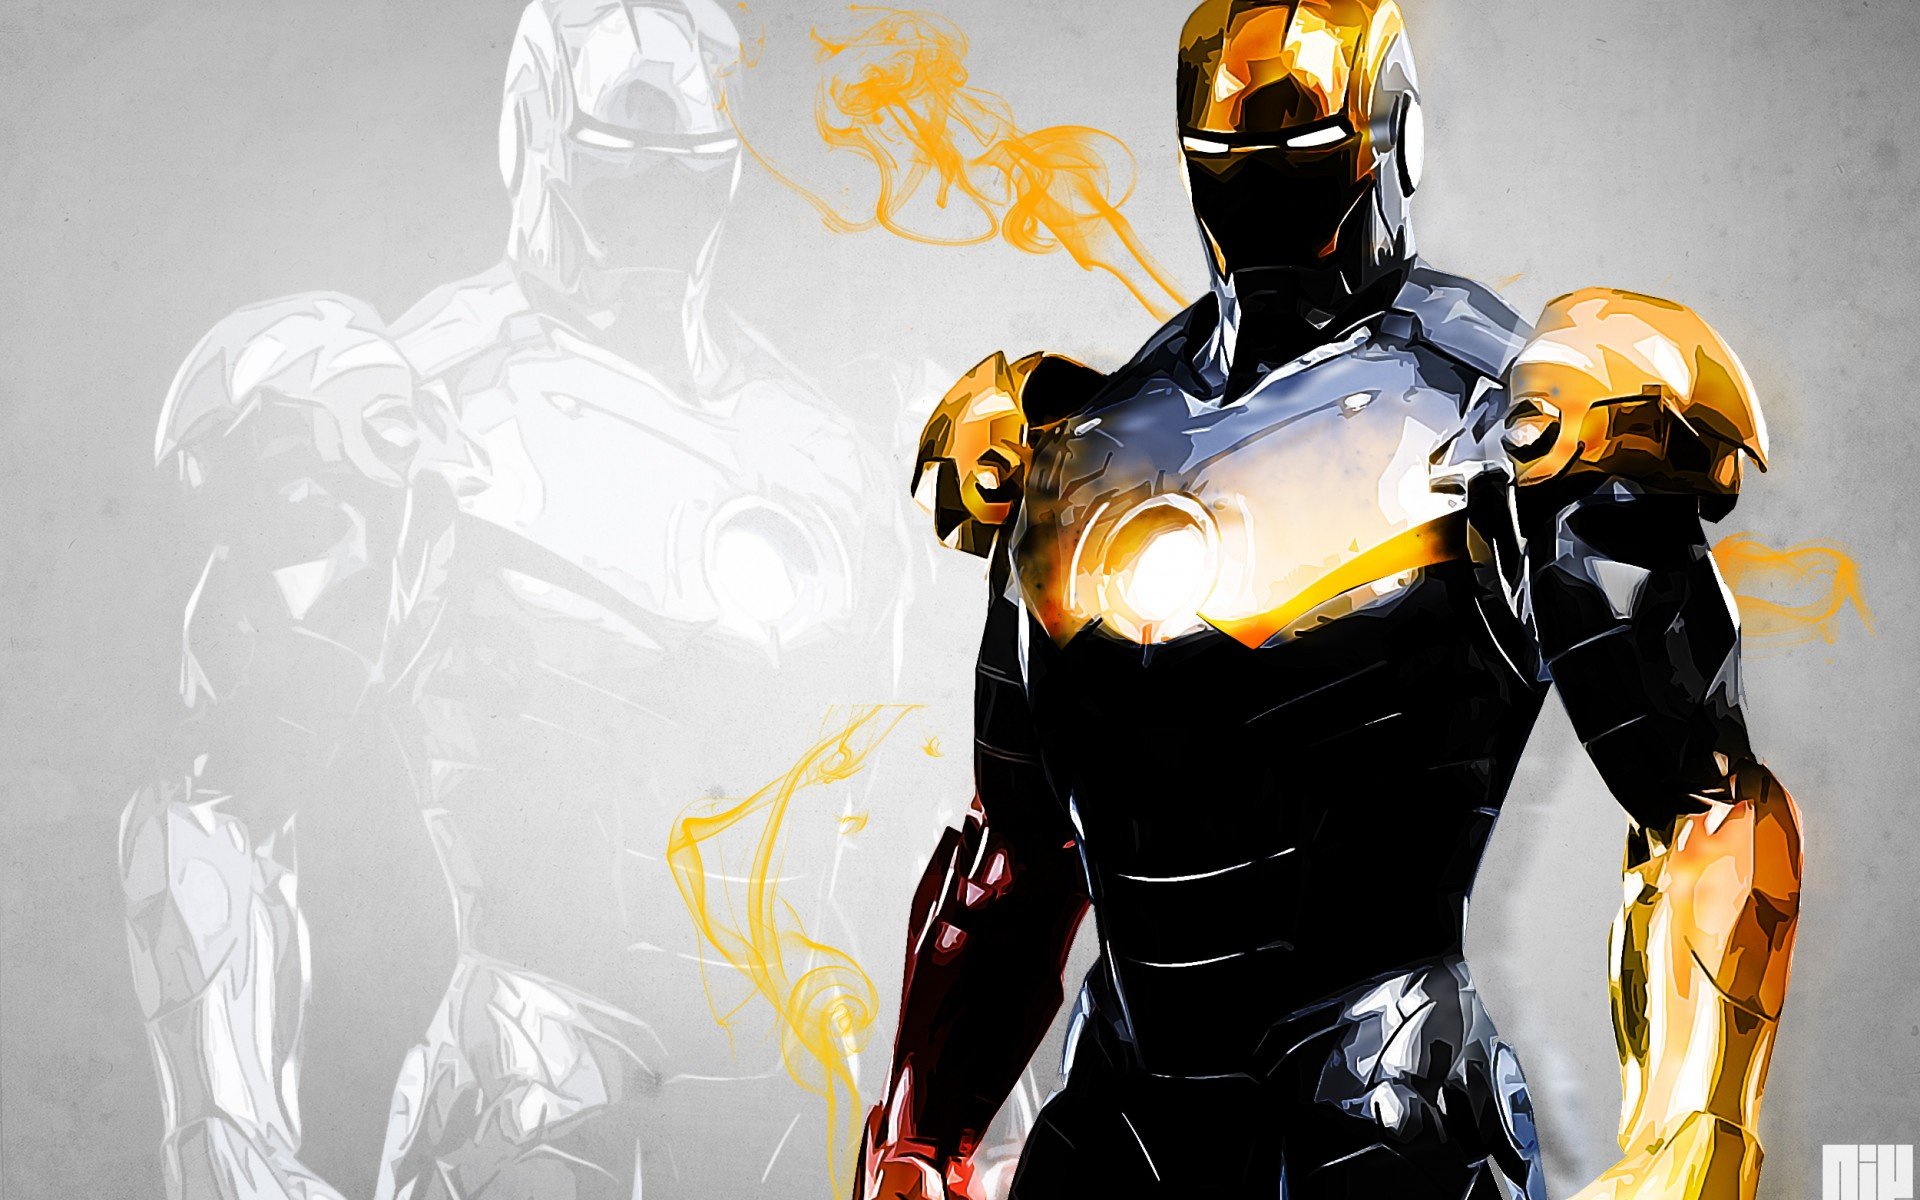 Iron man marvel comics superhero wallpaper 1920x1200 84804 1920x1200